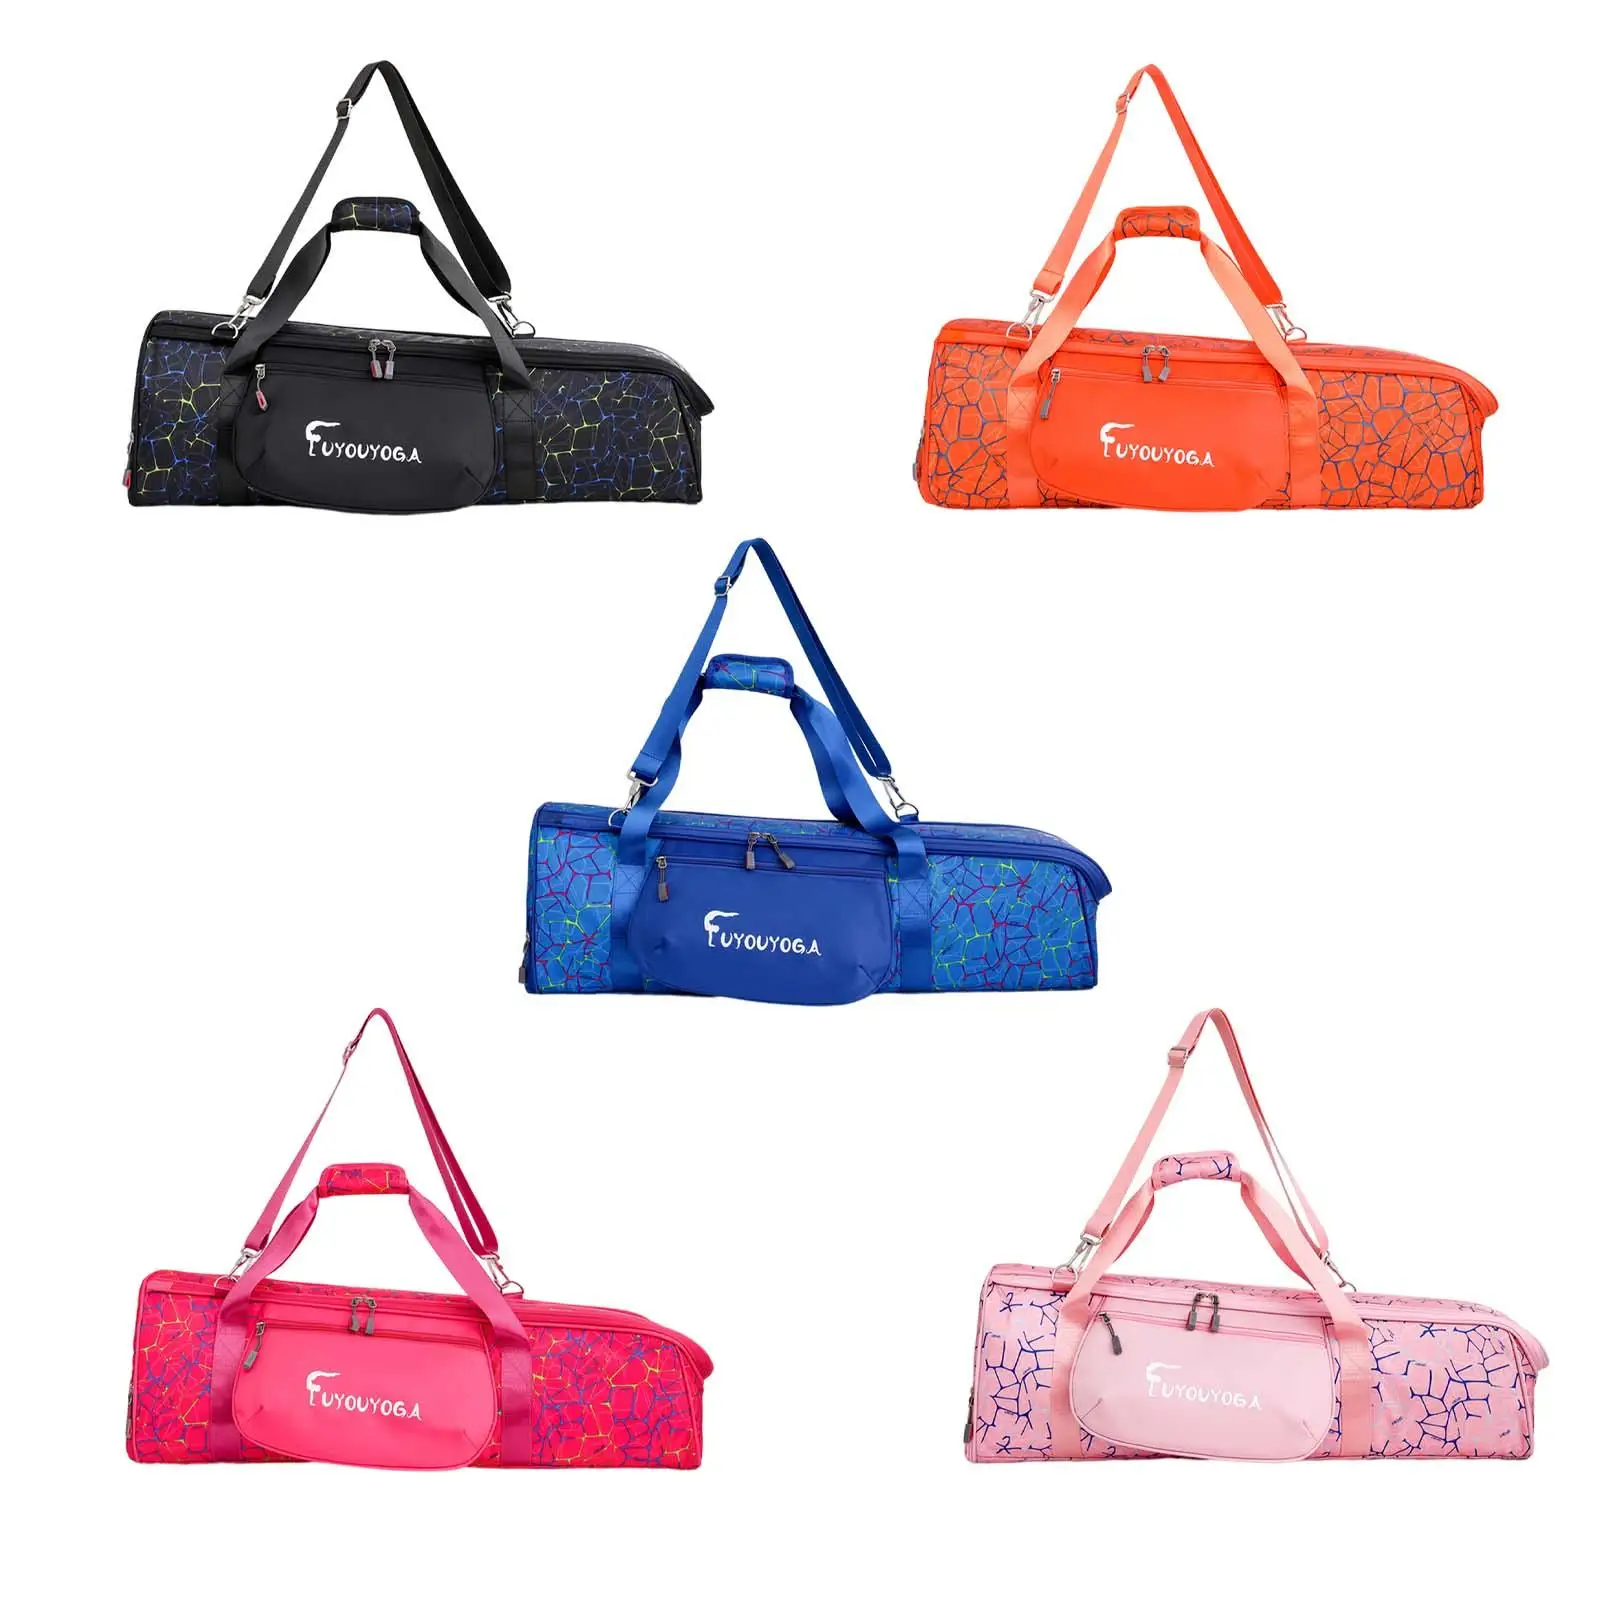 Yoga Mat Carrier Case Tote Carrying Bag Lightweight Stuff Sack Yoga Mat Bag Storage Bag for Shopping Yoga Fitness